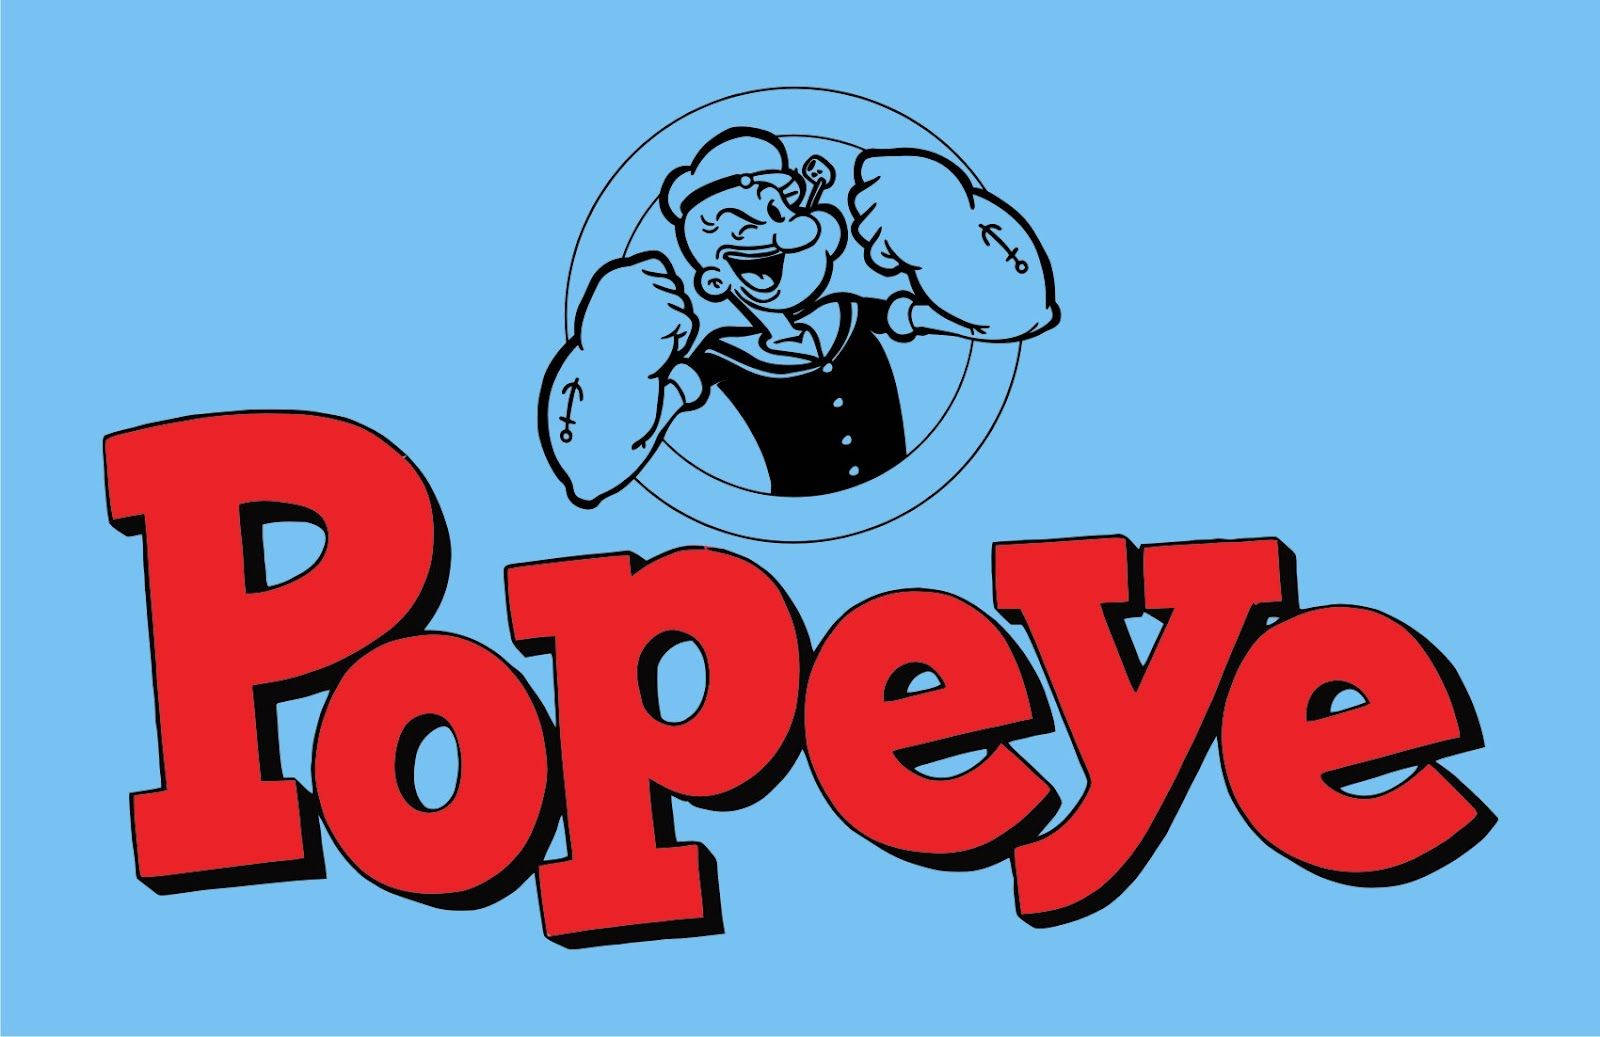 Popeye The Sailor Man Logo Background